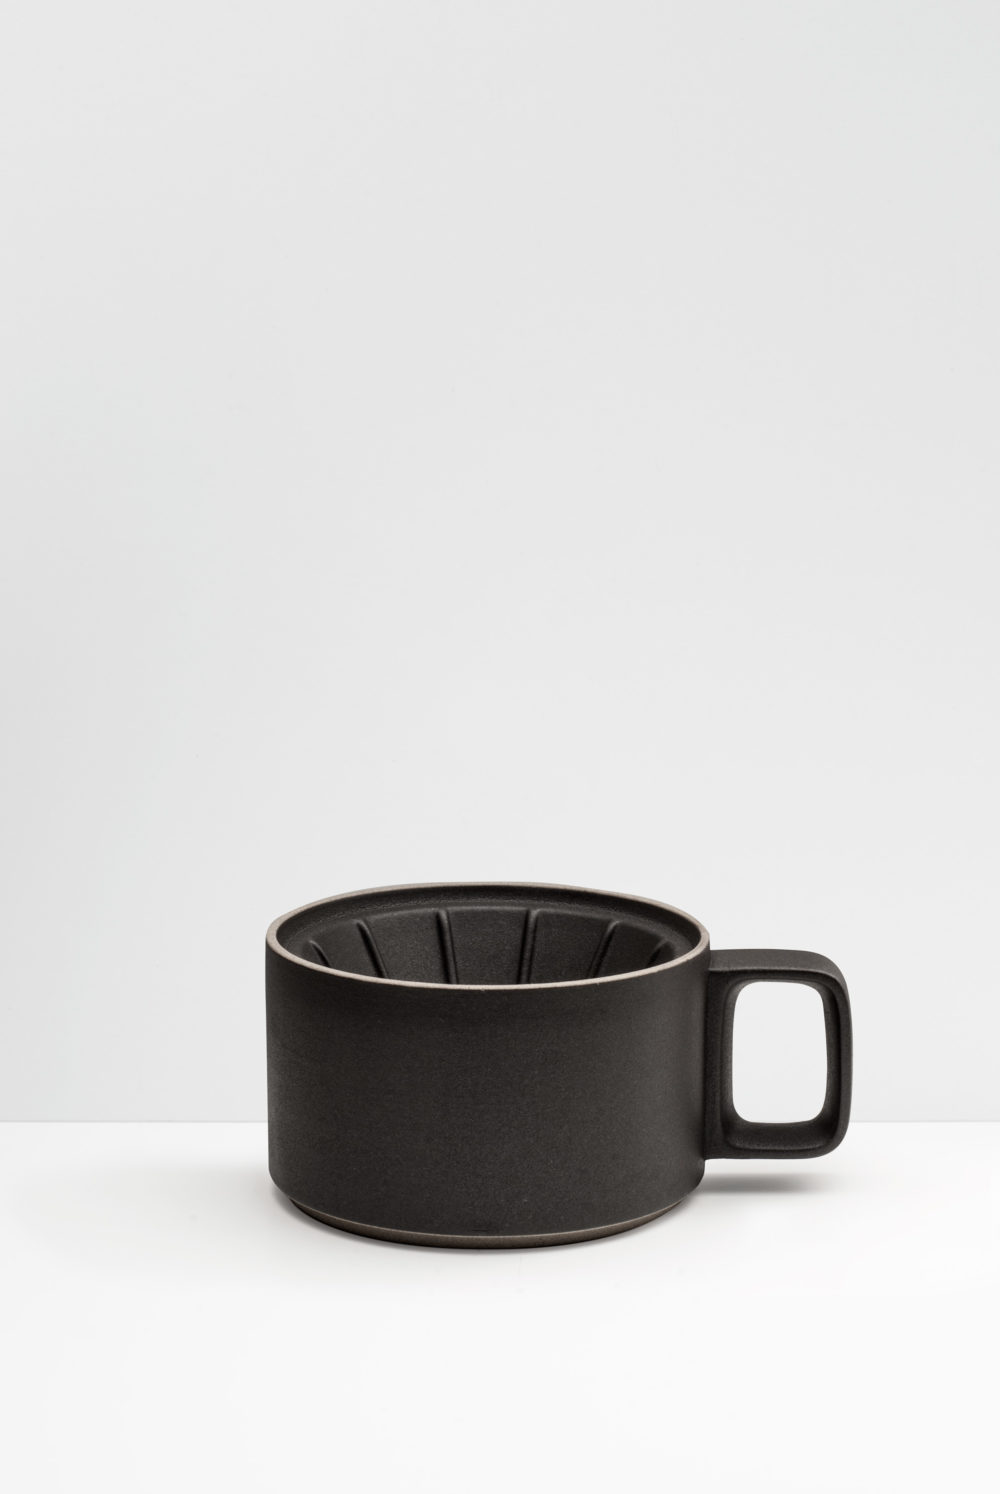 Hasami Porcelain Coffee Dripper